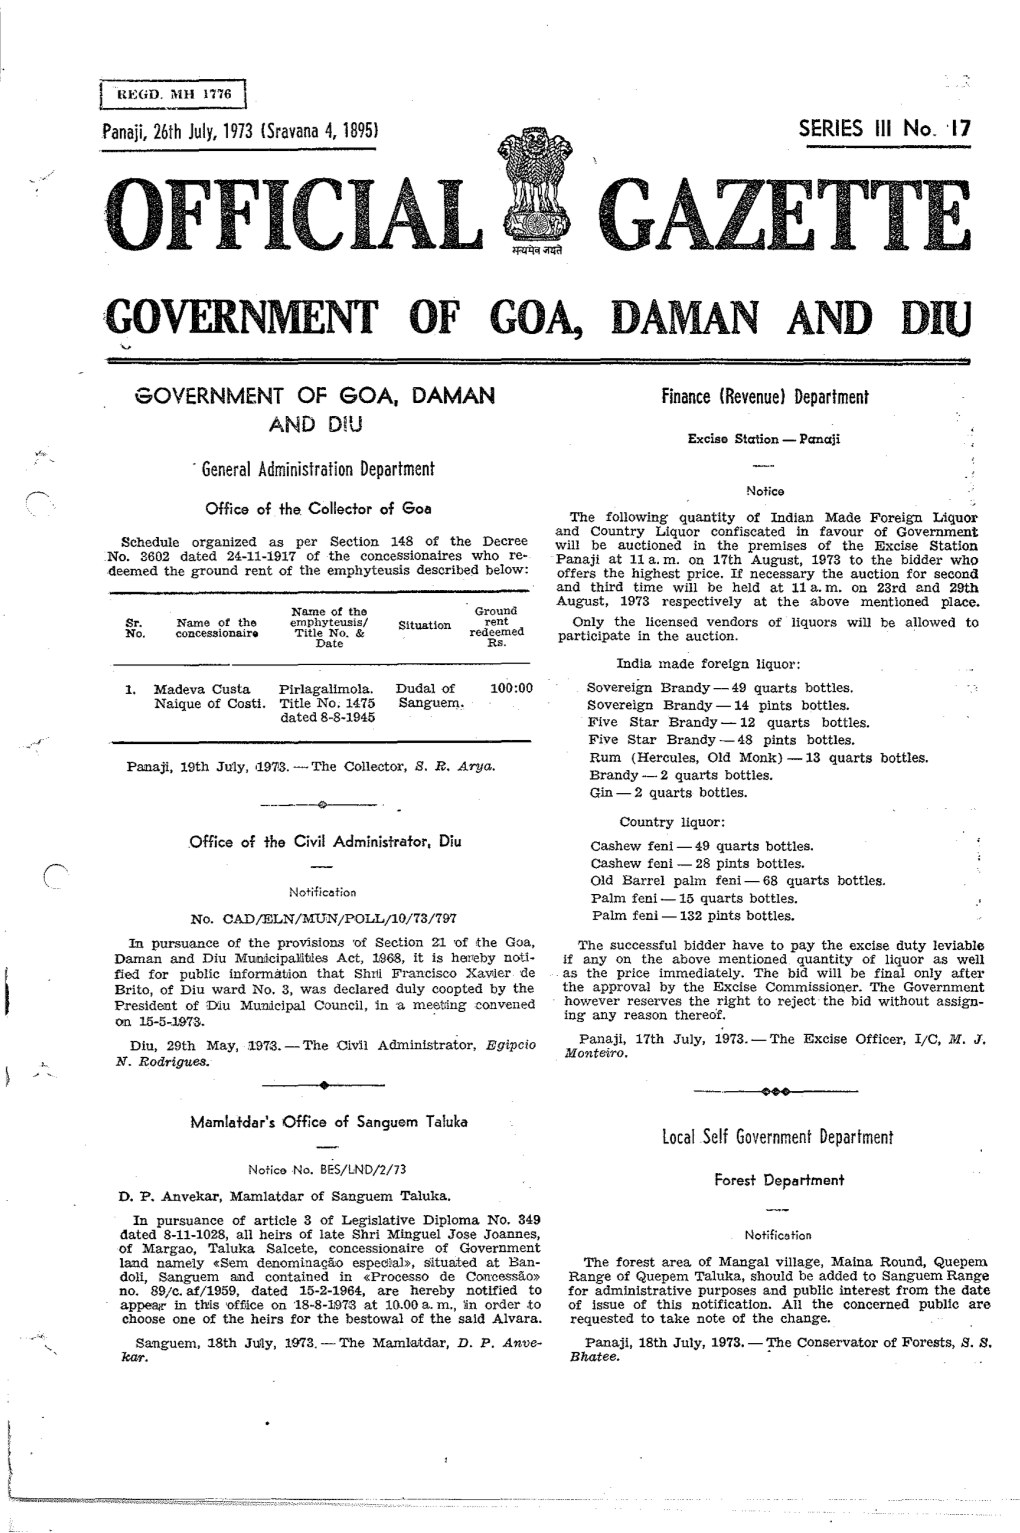 Official Gazette ,Government of Goa, Daman and Diu